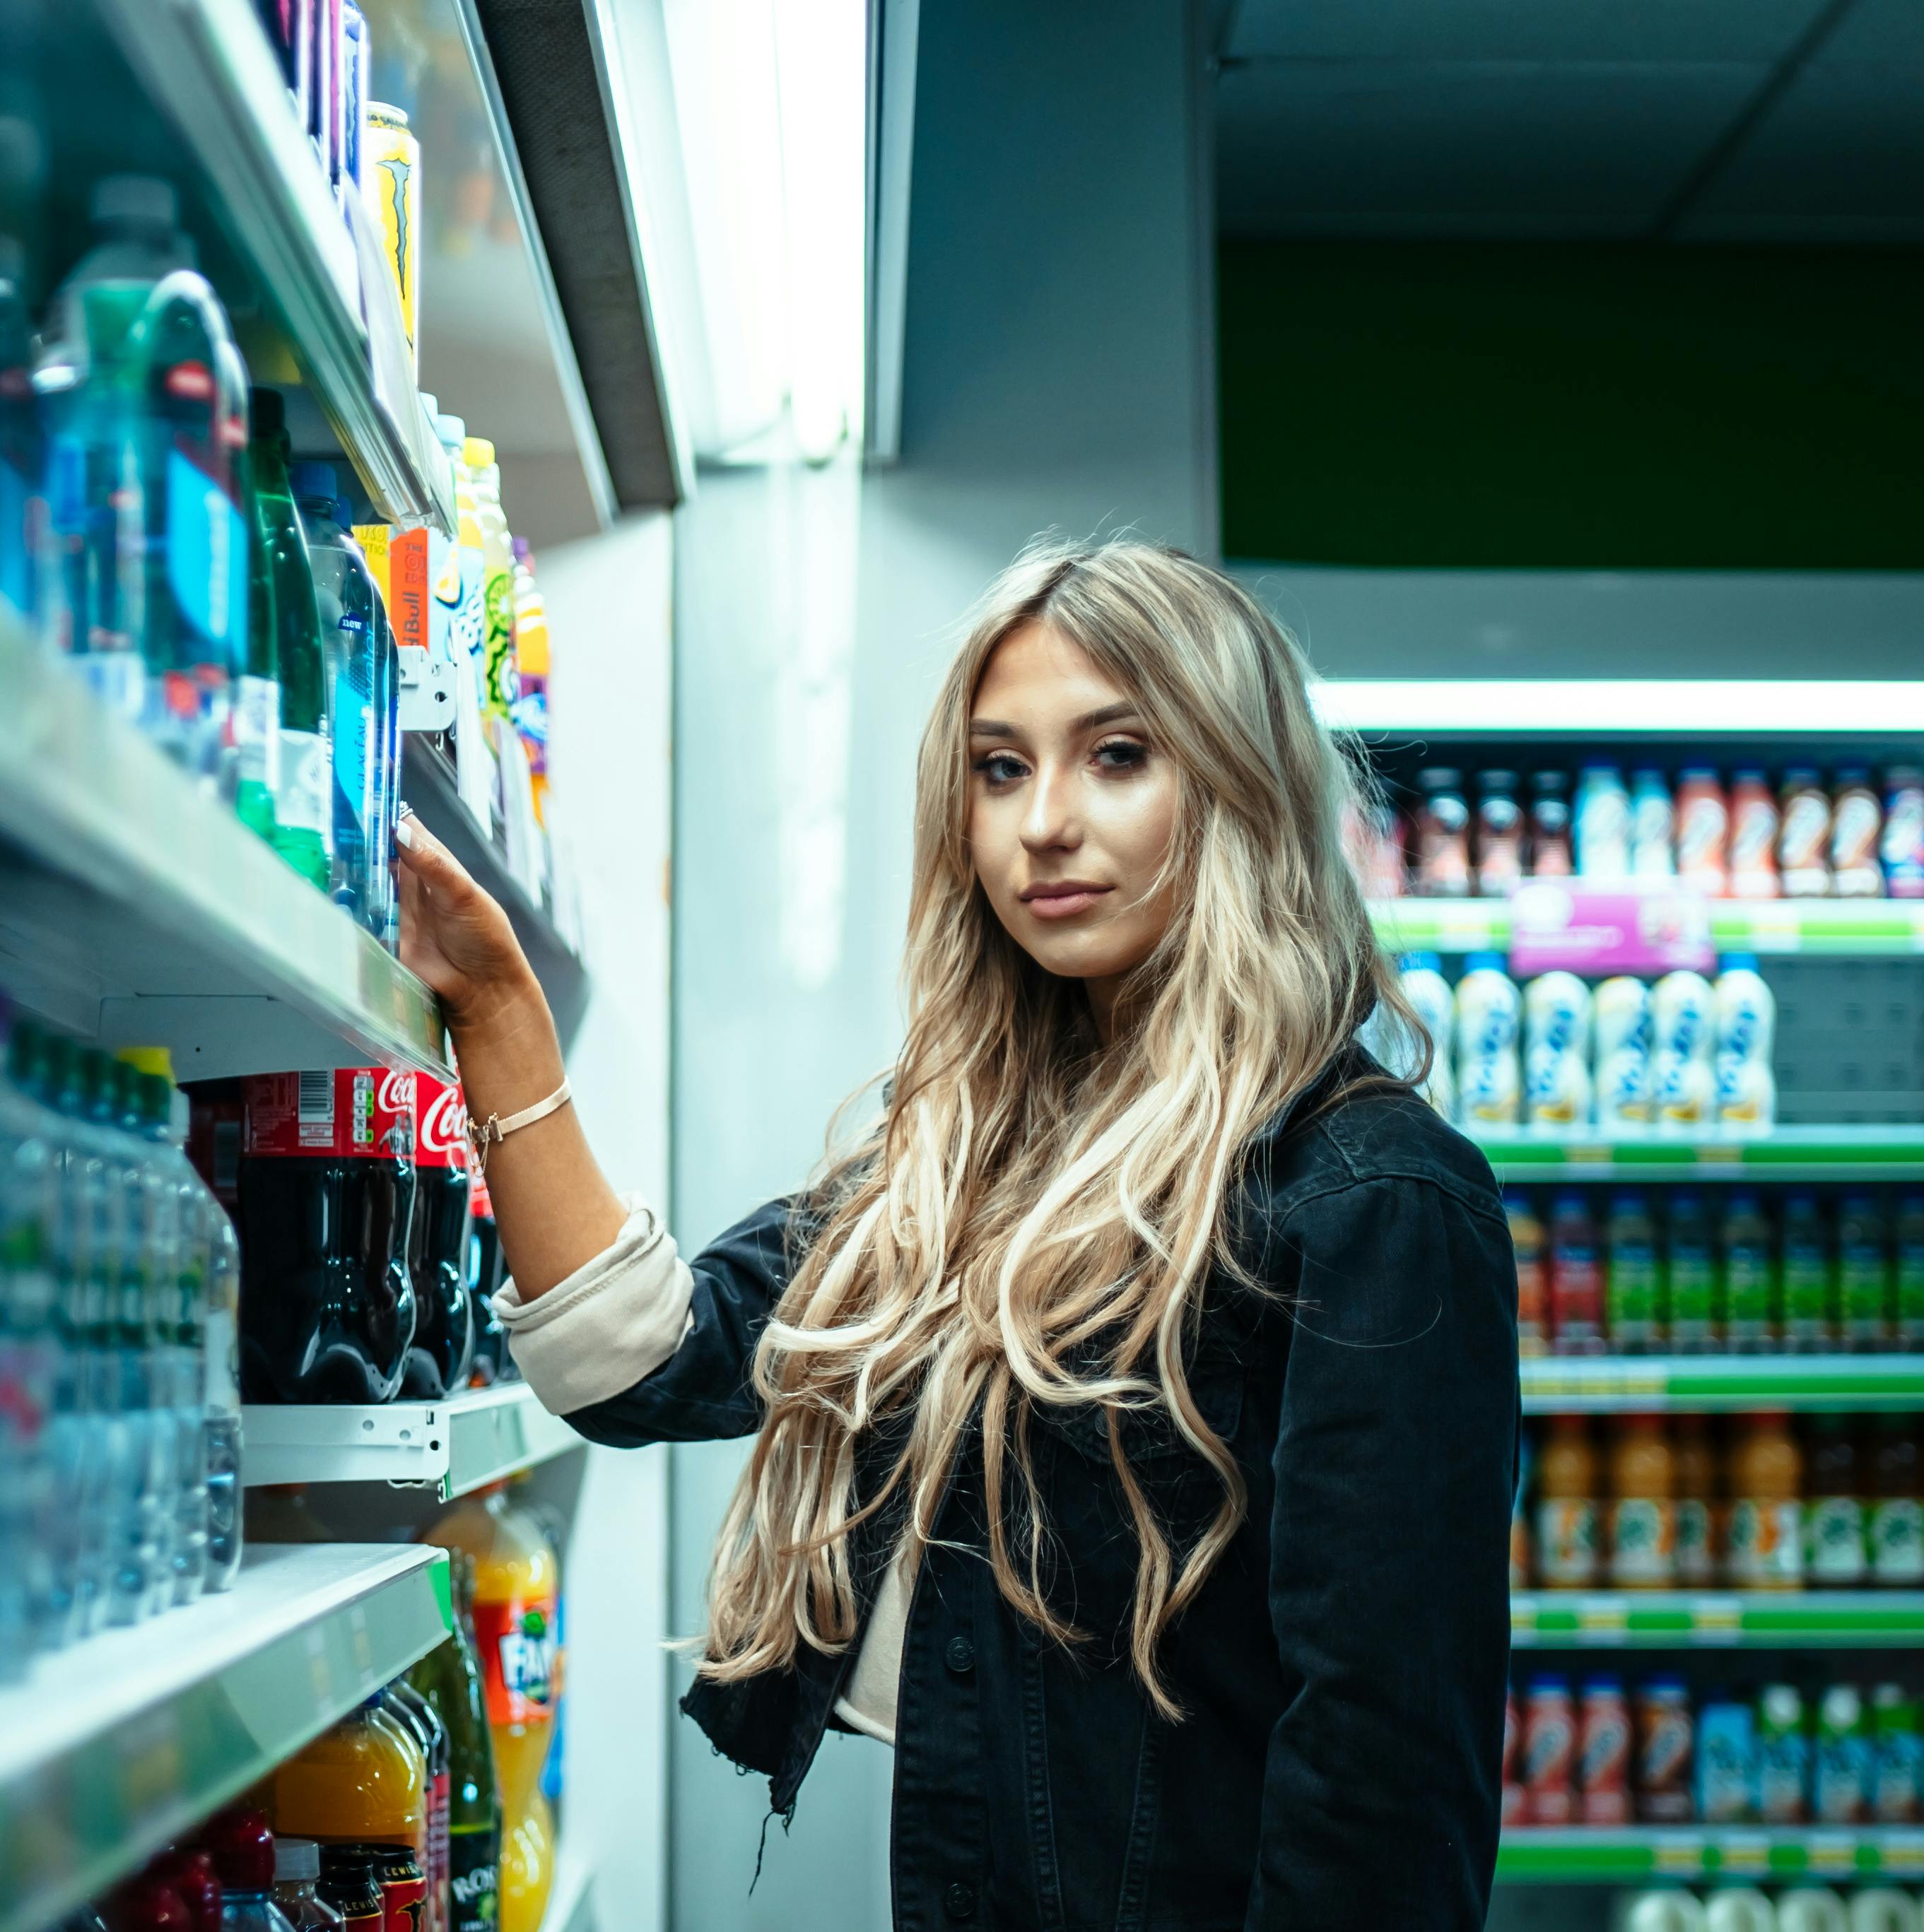 A woman beside a store shelf | Source: Pexels